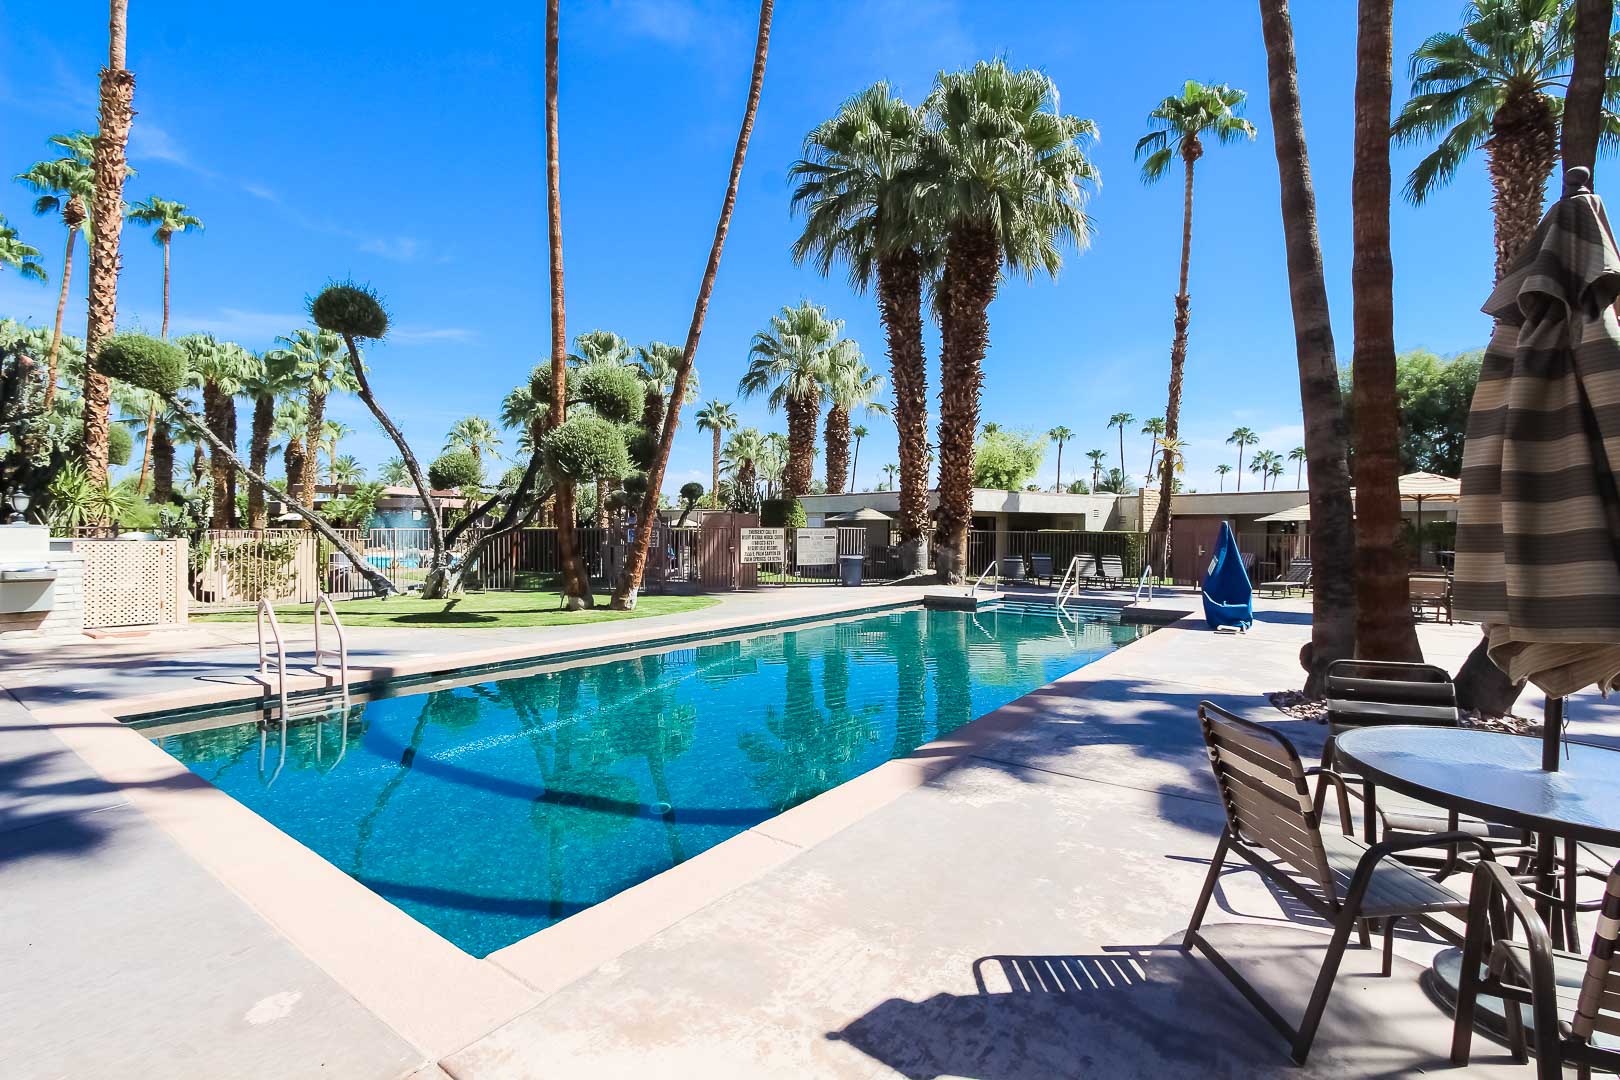 A refreshing outside swimming pool at VRI's Desert Isle Resort in California.